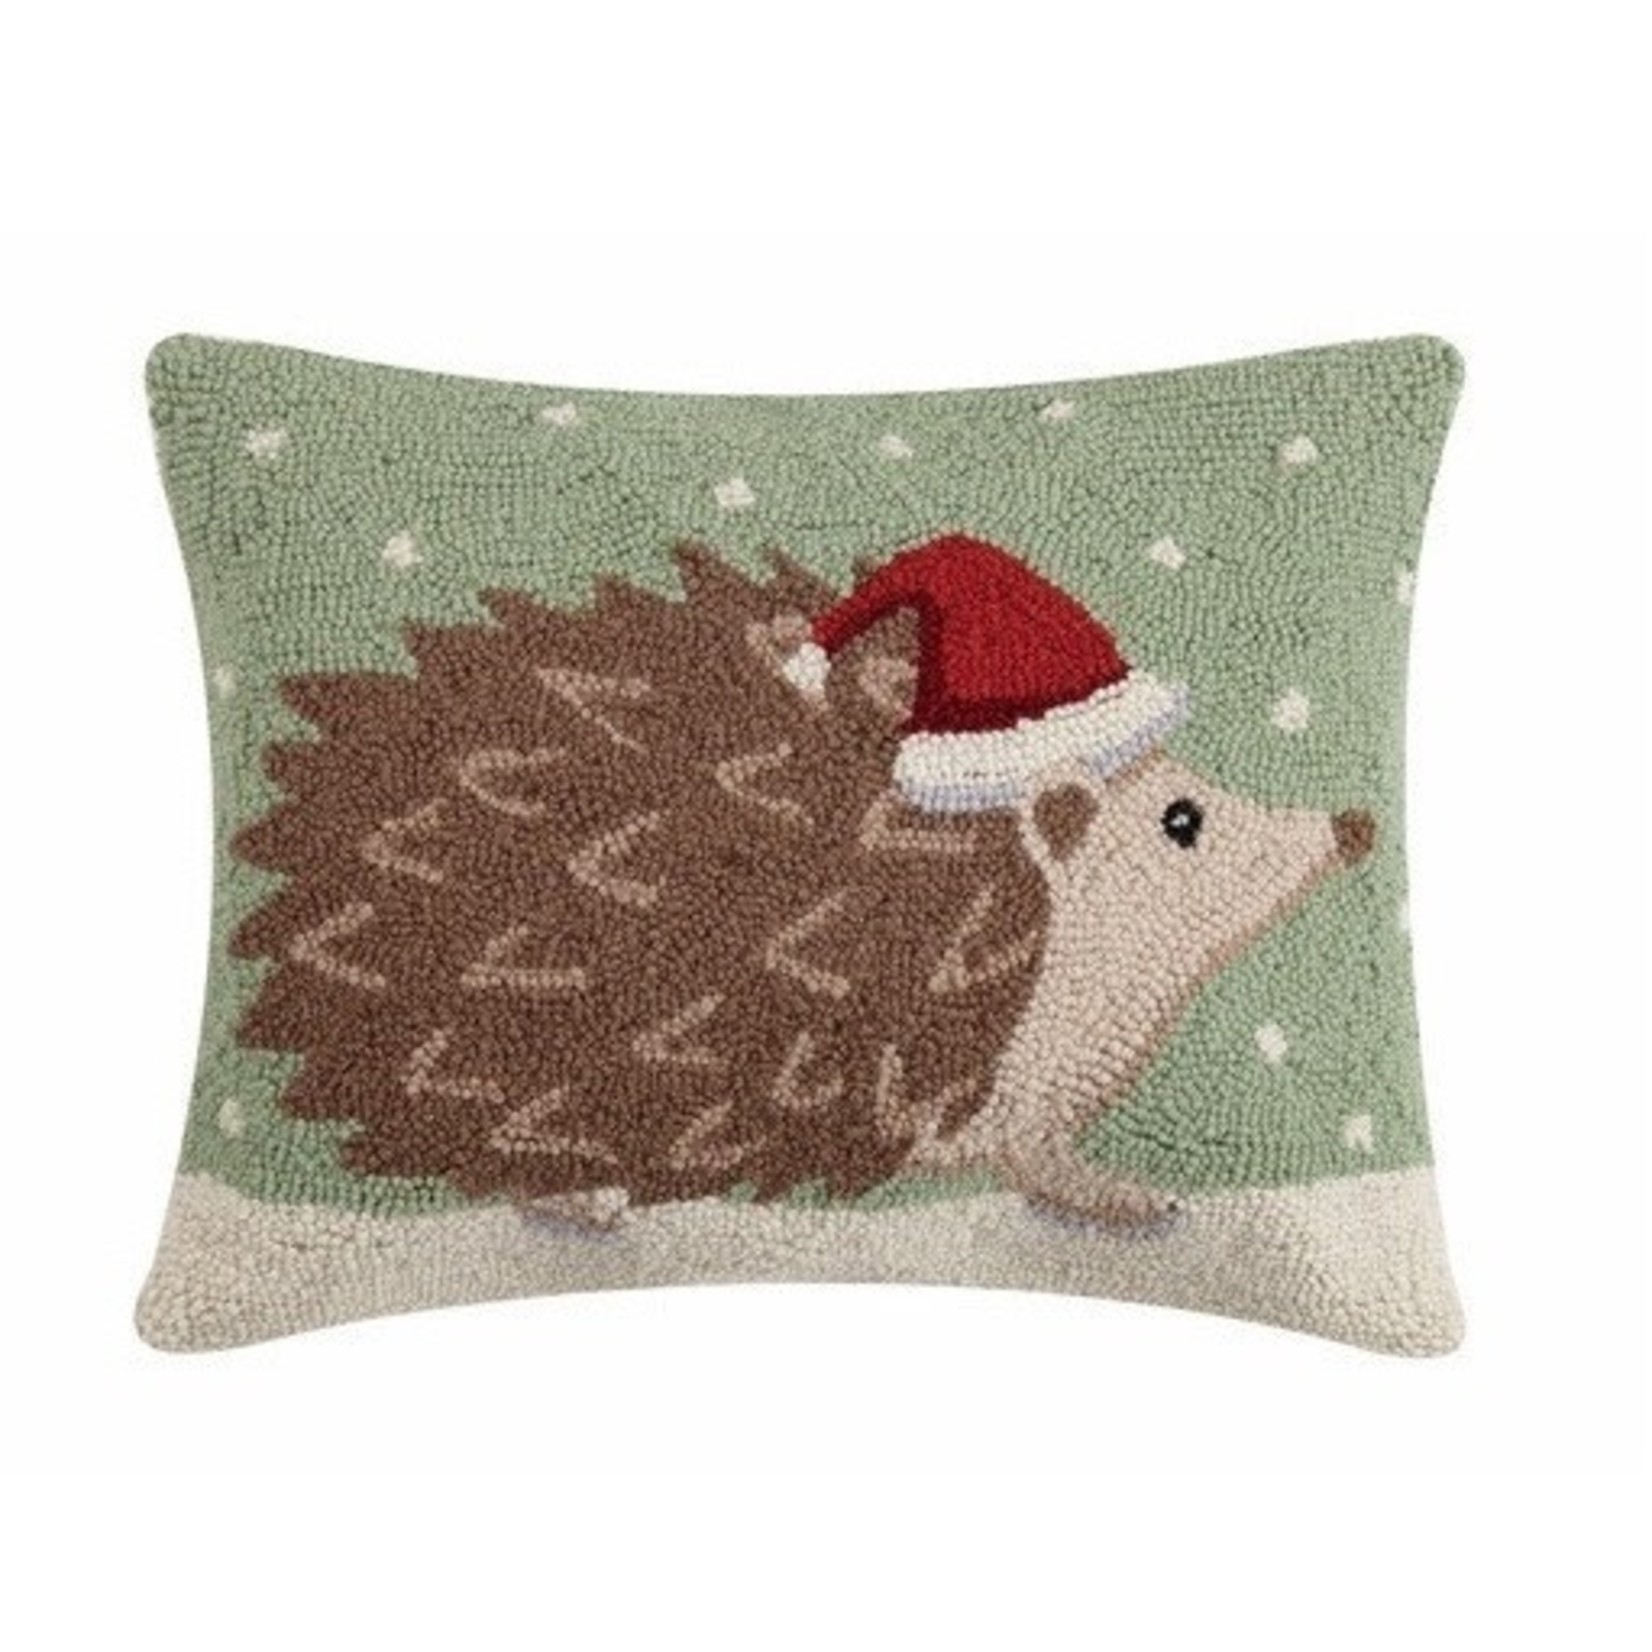 Pillows - Hooked Christmas Hedgehog Pillow